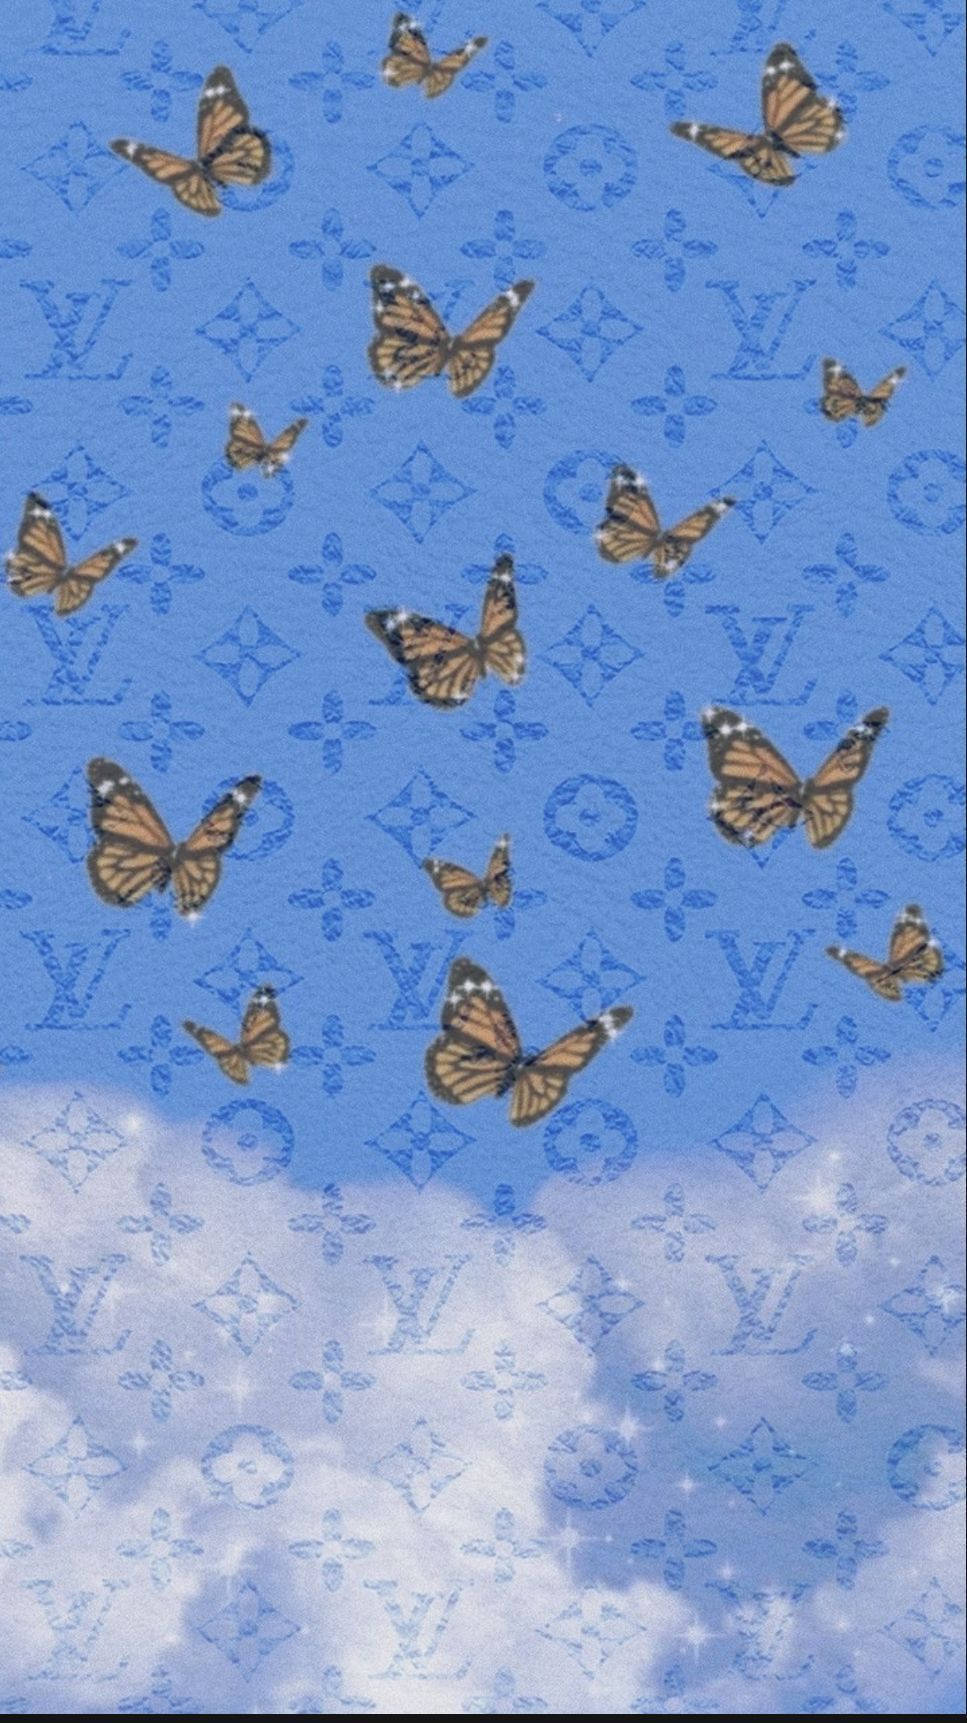 Butterfly Louis Vuitton Wallpapers - Wallpaper Cave